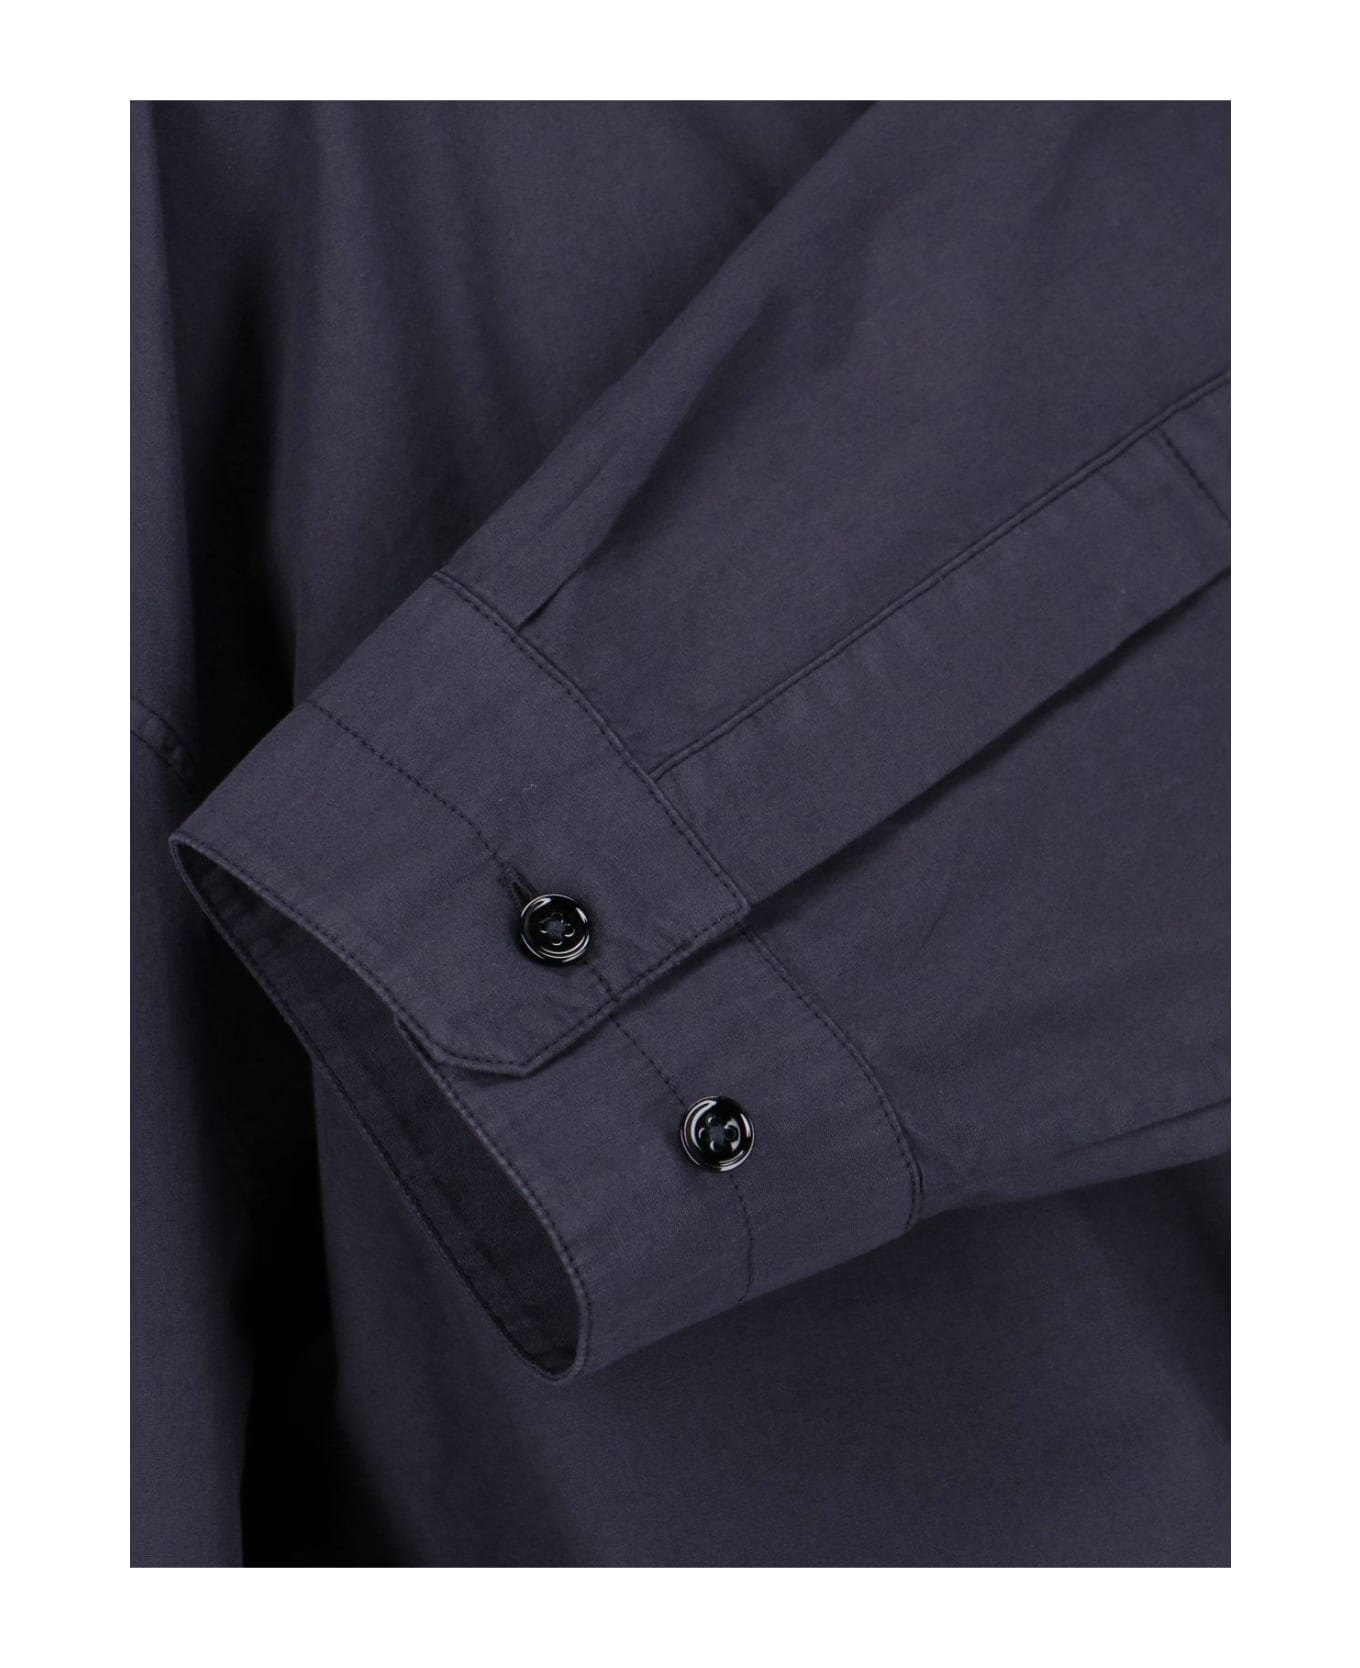 Lemaire Twist-detailed Button-up Shirt - BLUE